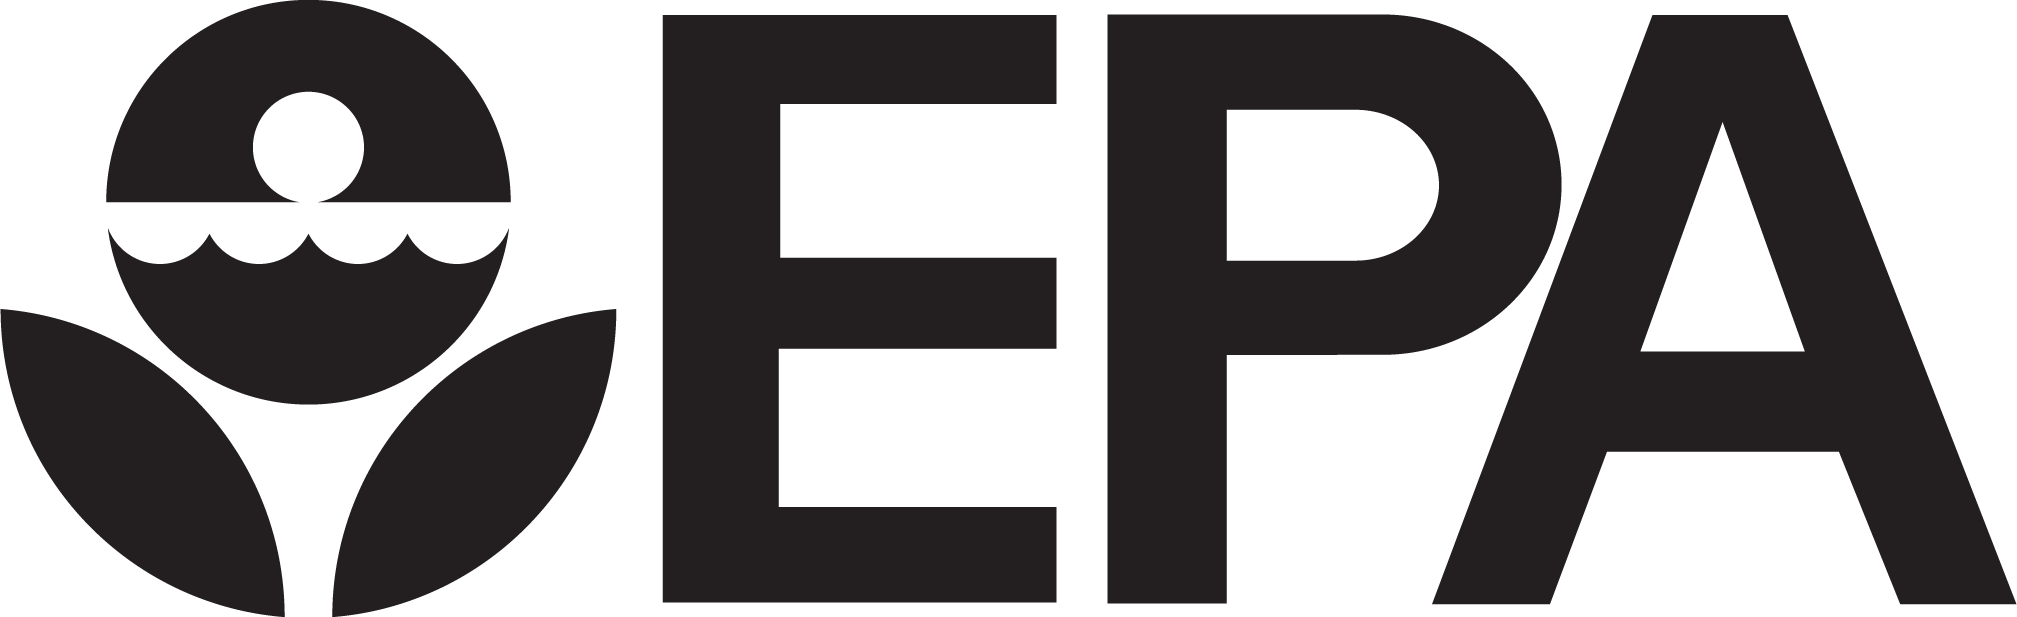 EPA Logo - Epa Logos